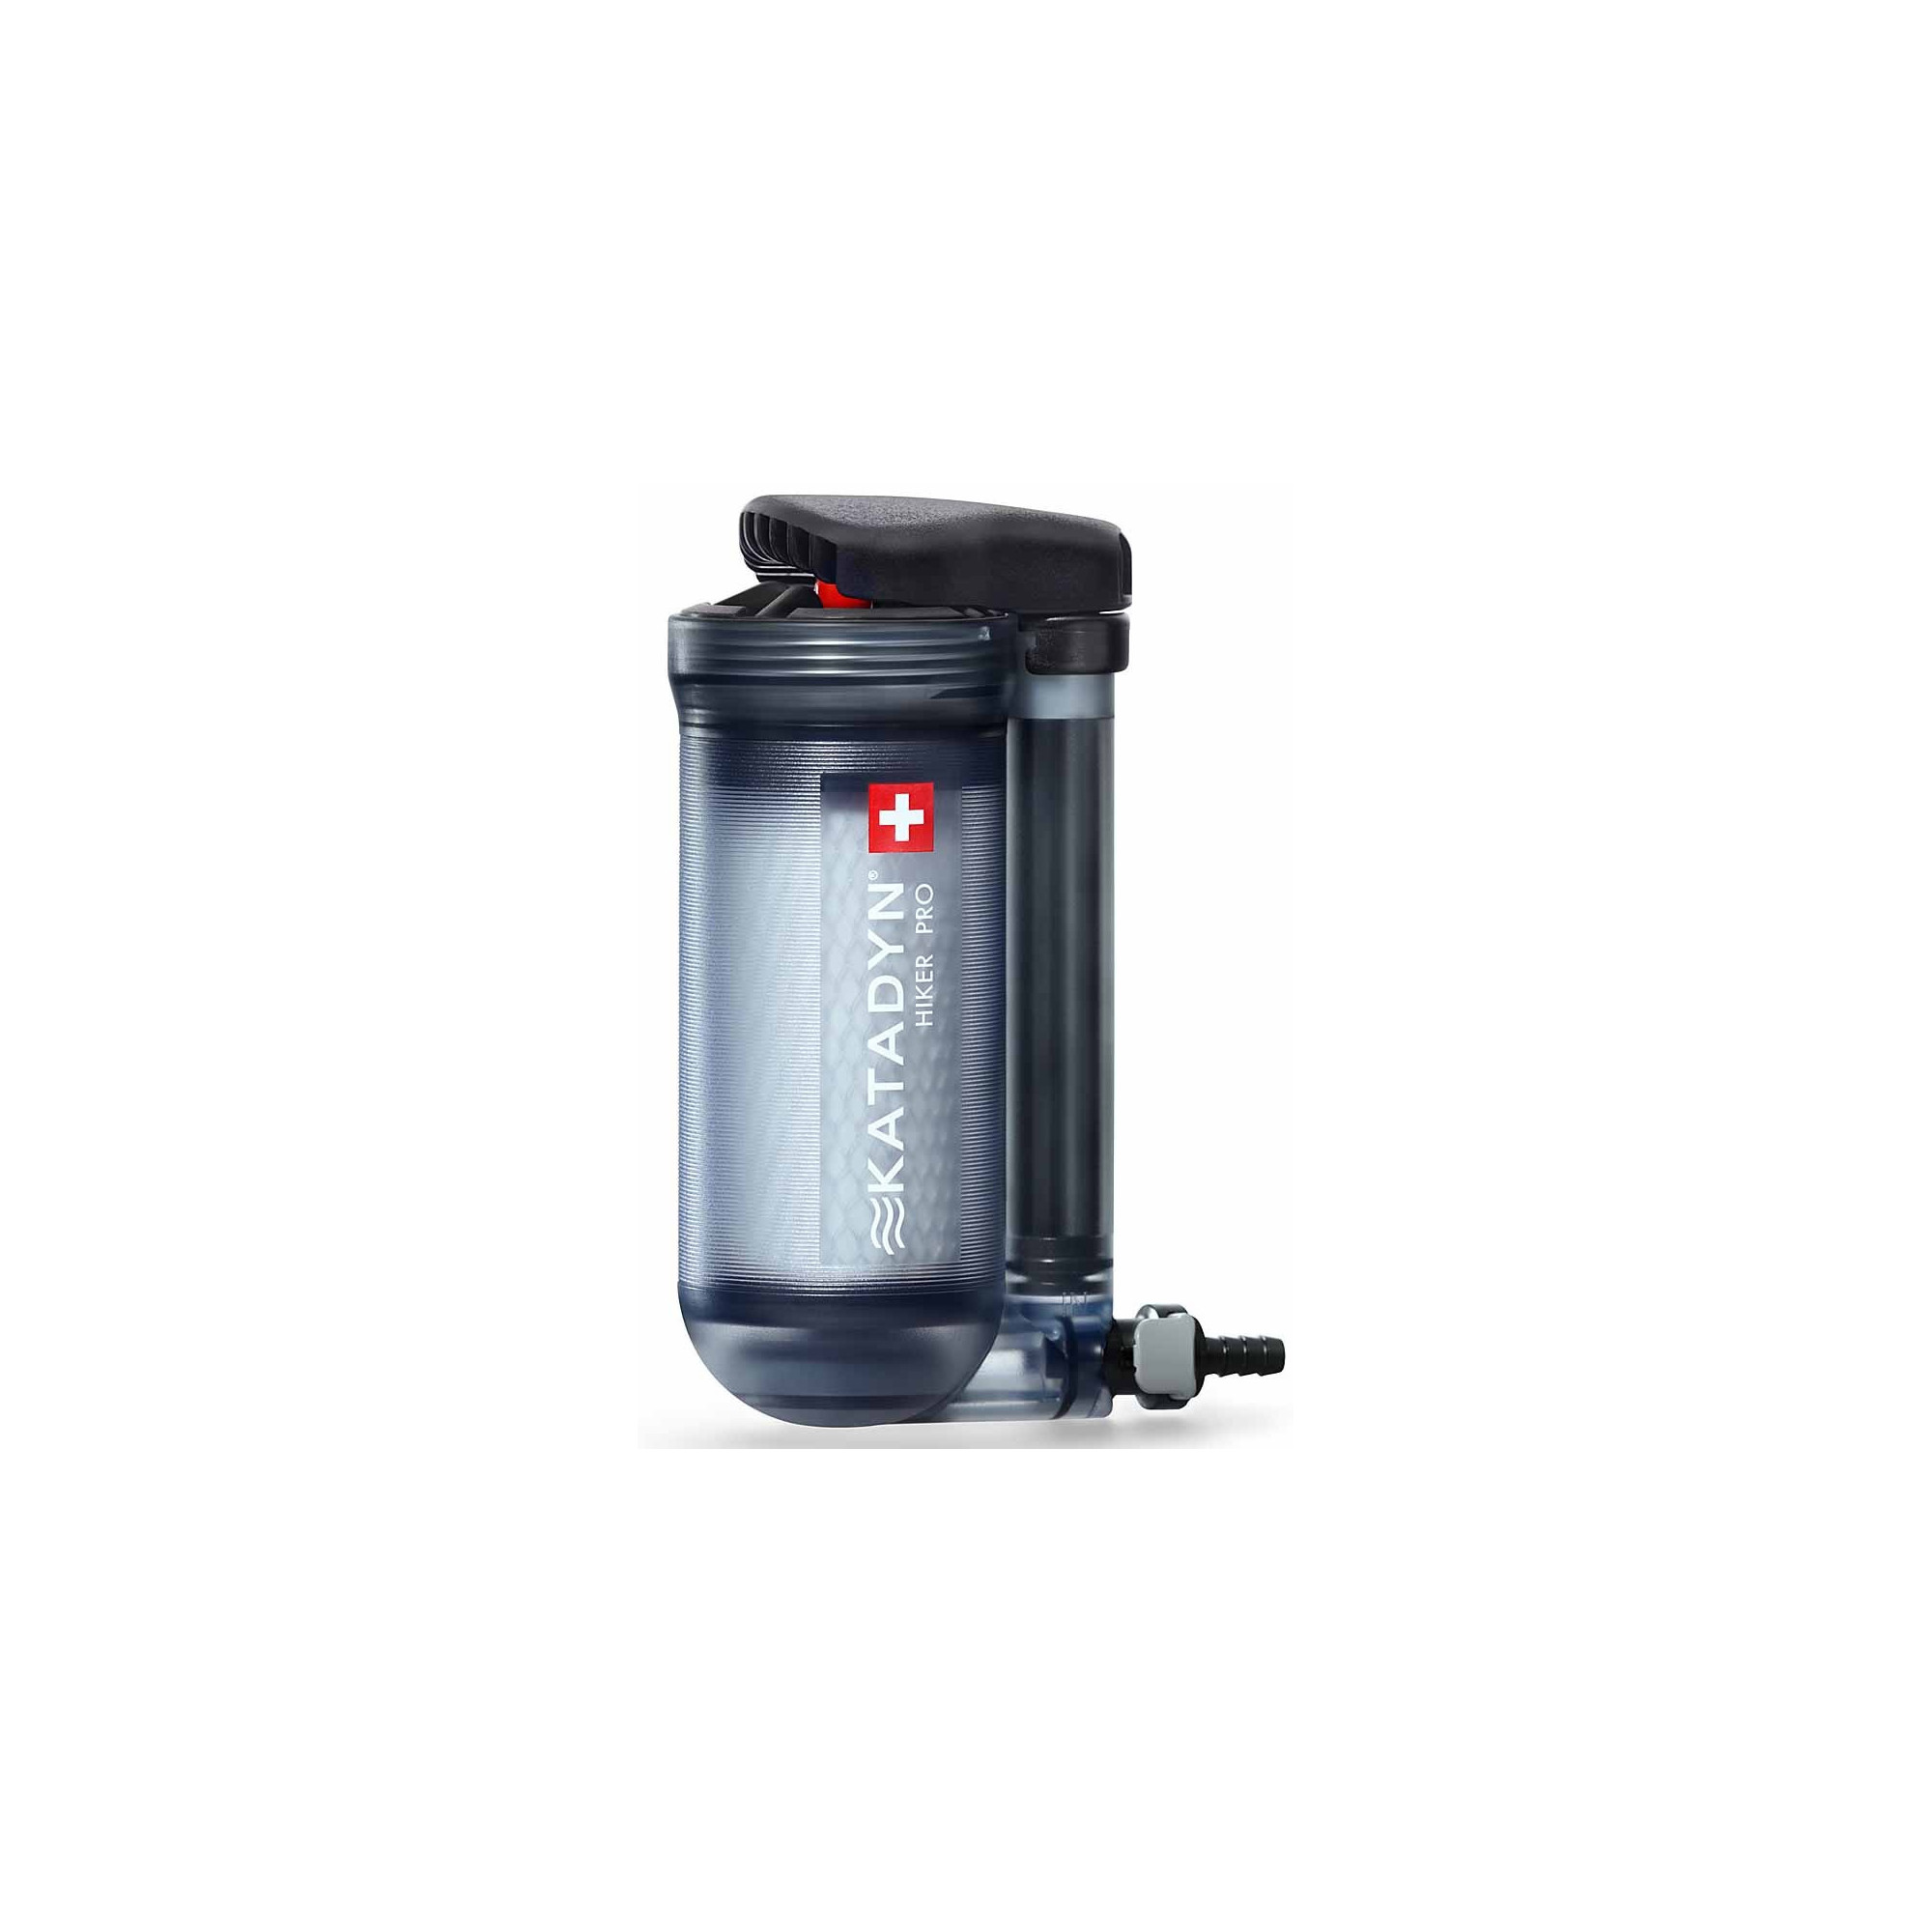 Hiker Pro Katadyn Water Filter